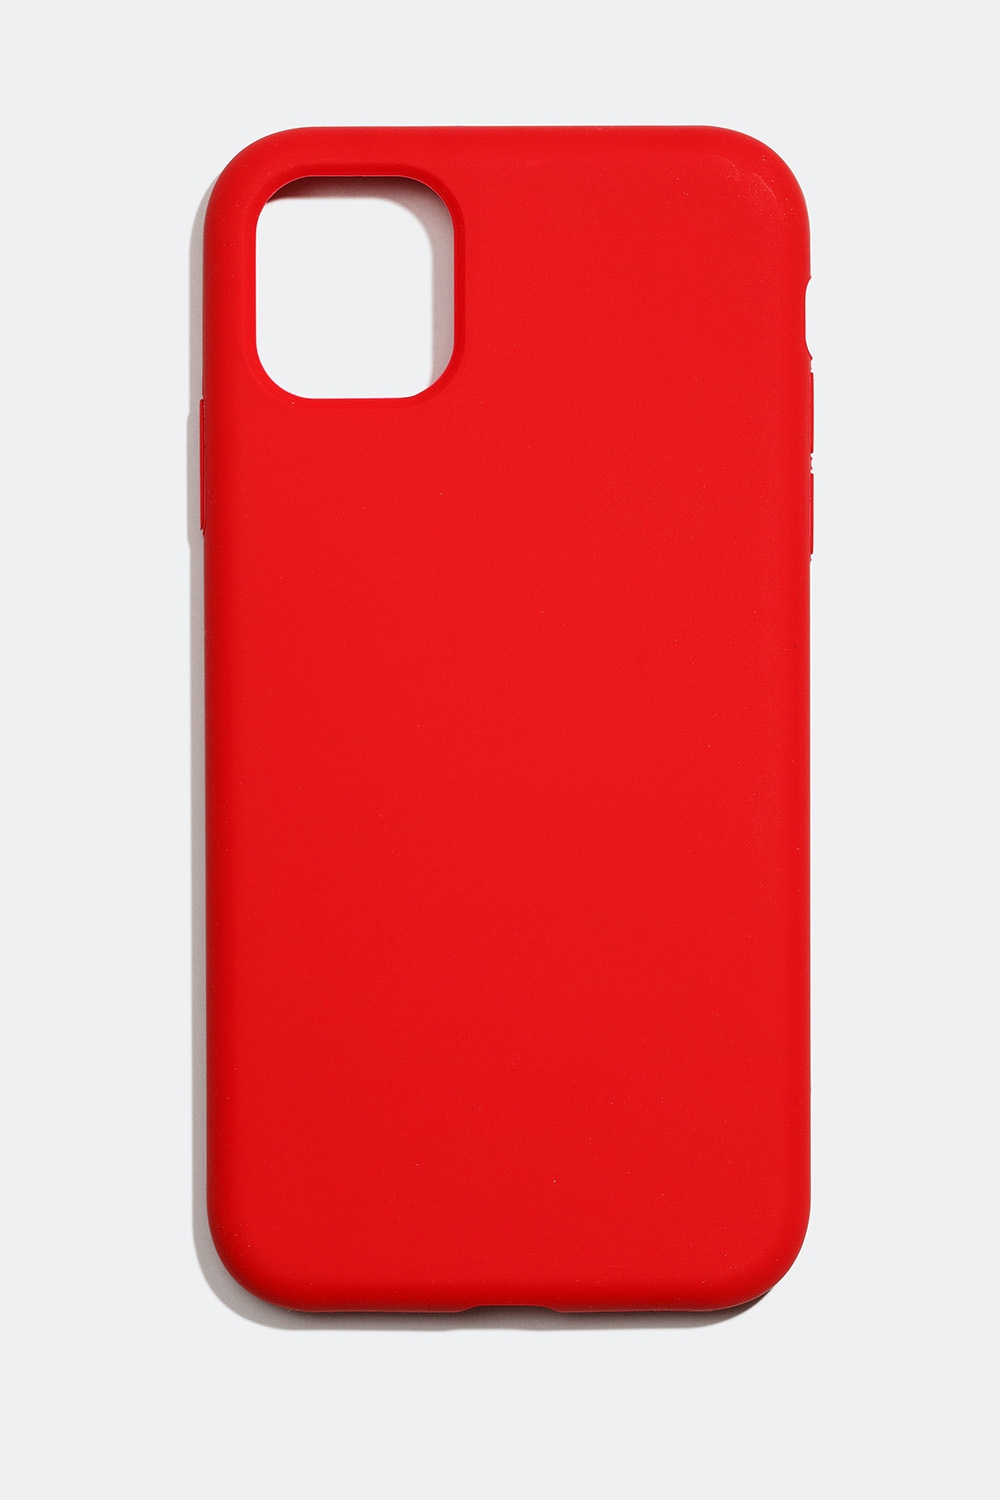 Telefoncover i mat rød – iPhone 11/XR i gruppen Accessories / Mobiltilbehør / Mobilcovers / iPhone 11 / XR hos Glitter (174000356211)